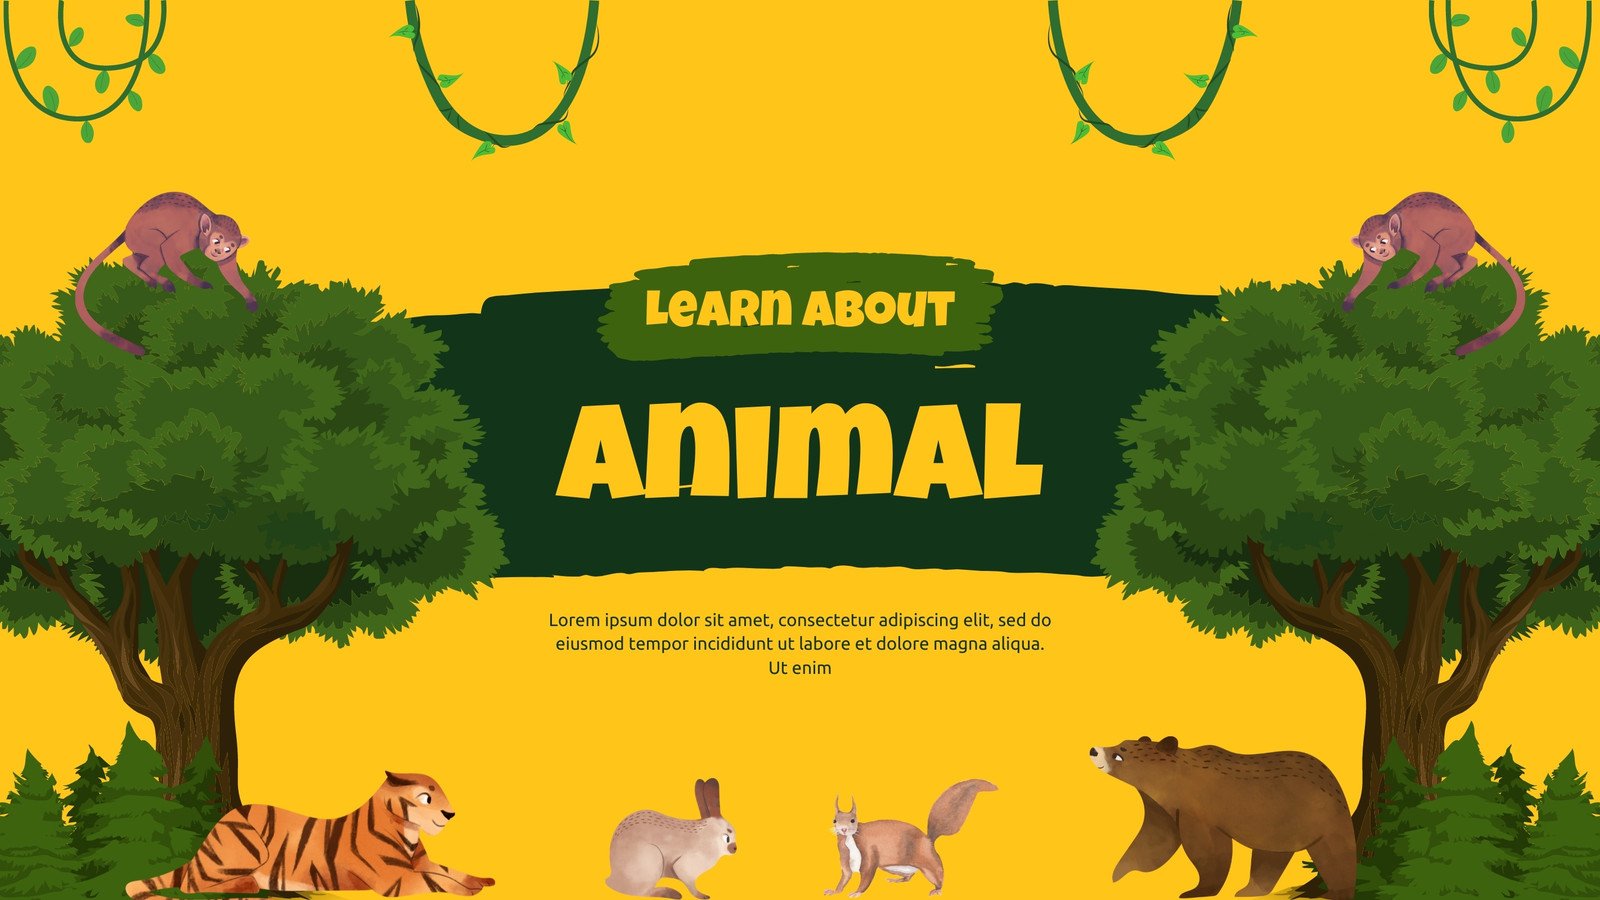 Free and customizable animal templates